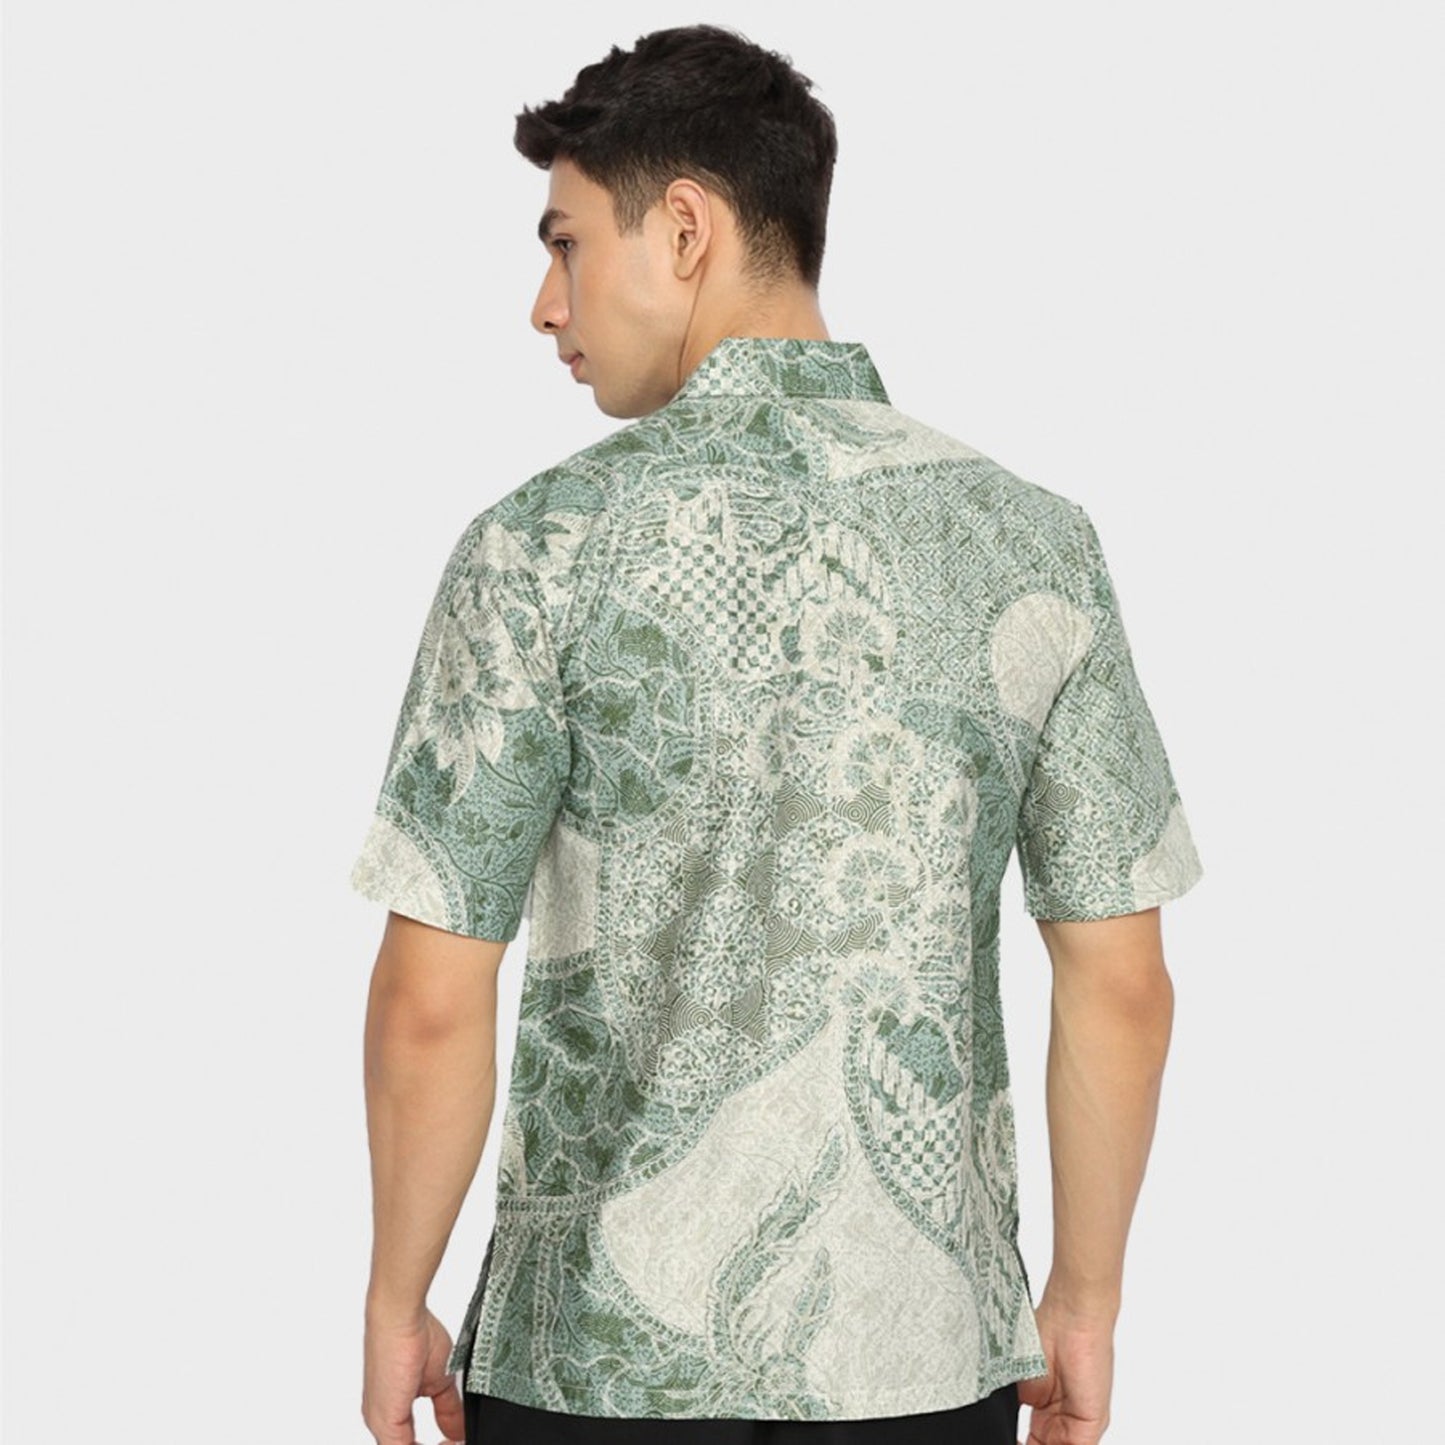 Green Vibes: Ardiya Regfit Batik Kemeja with Short Sleeves, Stylish Men, Men Batik, Batik, Shirt, Batik Shirt, Formal Shirt For Men